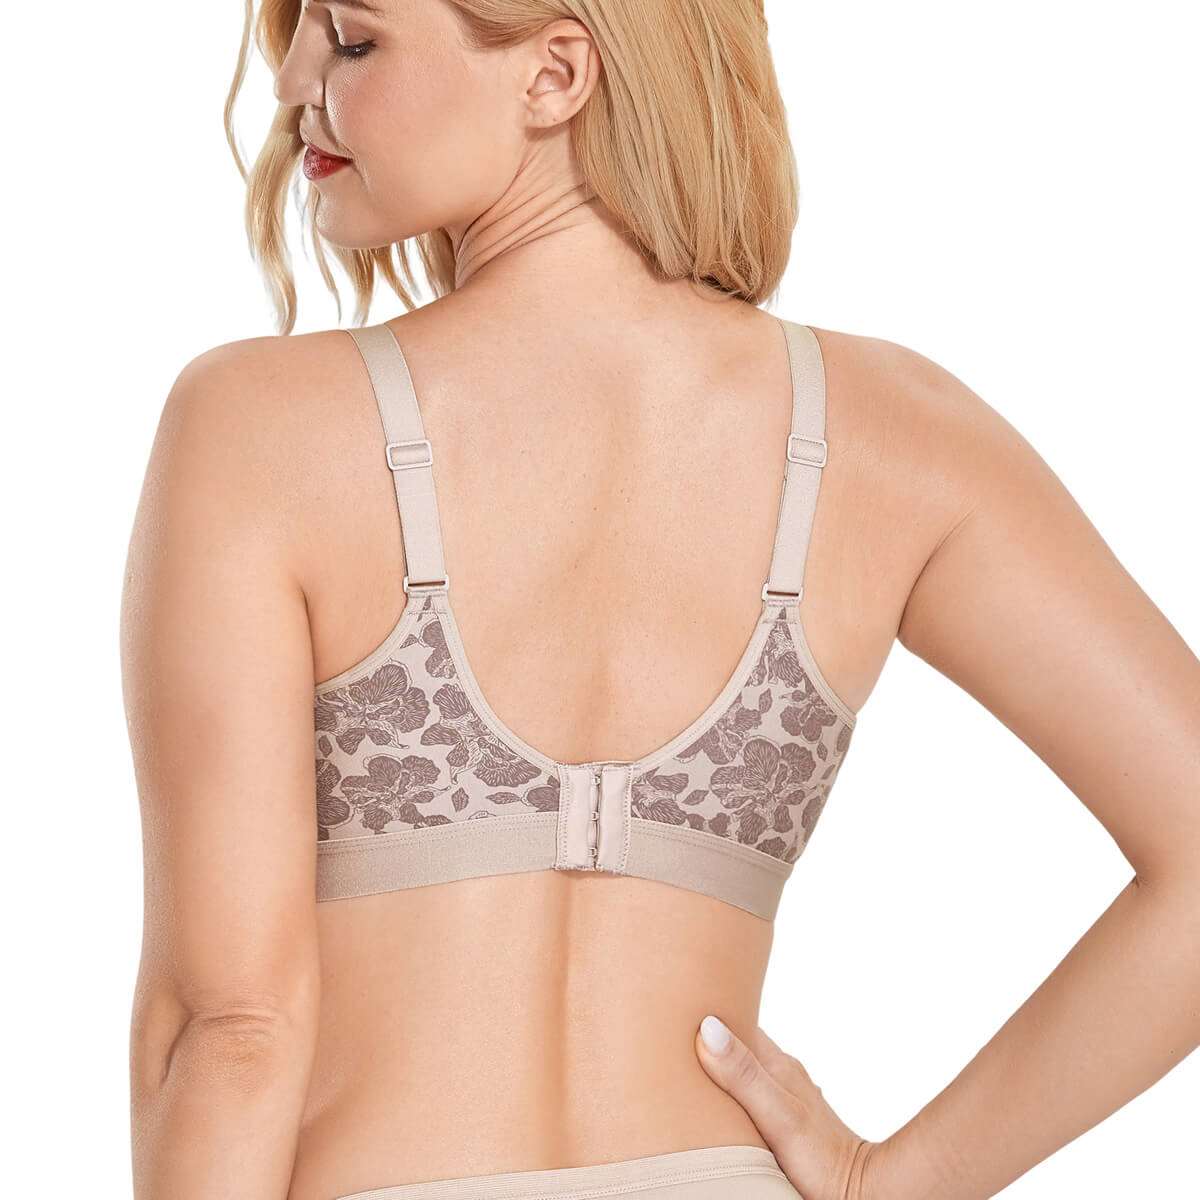 Women's Bra Wirefree Cotton Bra, Sleeping Underwear Soft Cup Plus Size Bra  Full Coverage Bralette (Color : Gray, Size : 48D)